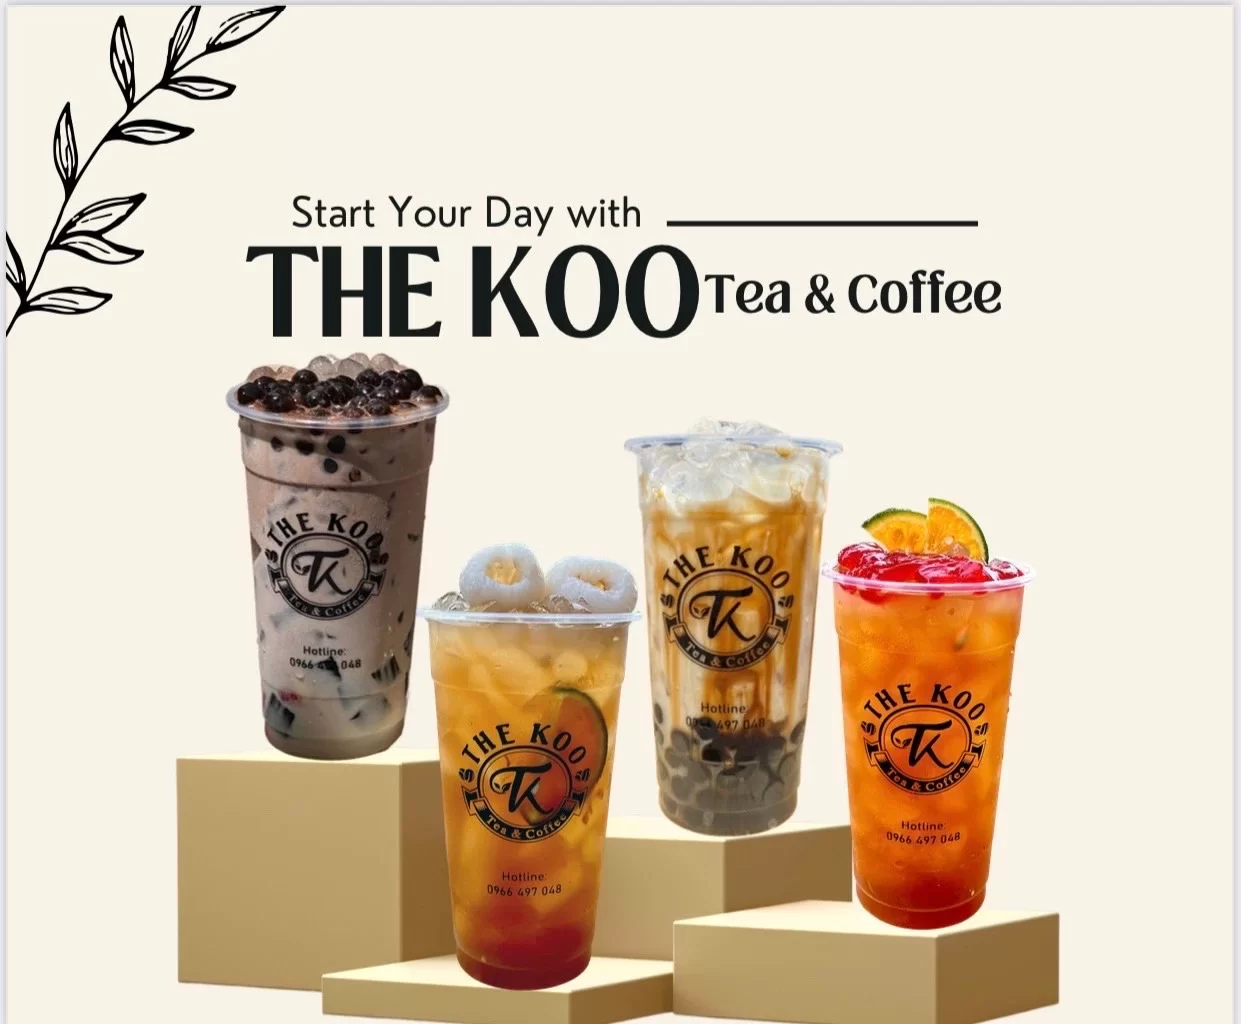 The KOO Tea & Coffee